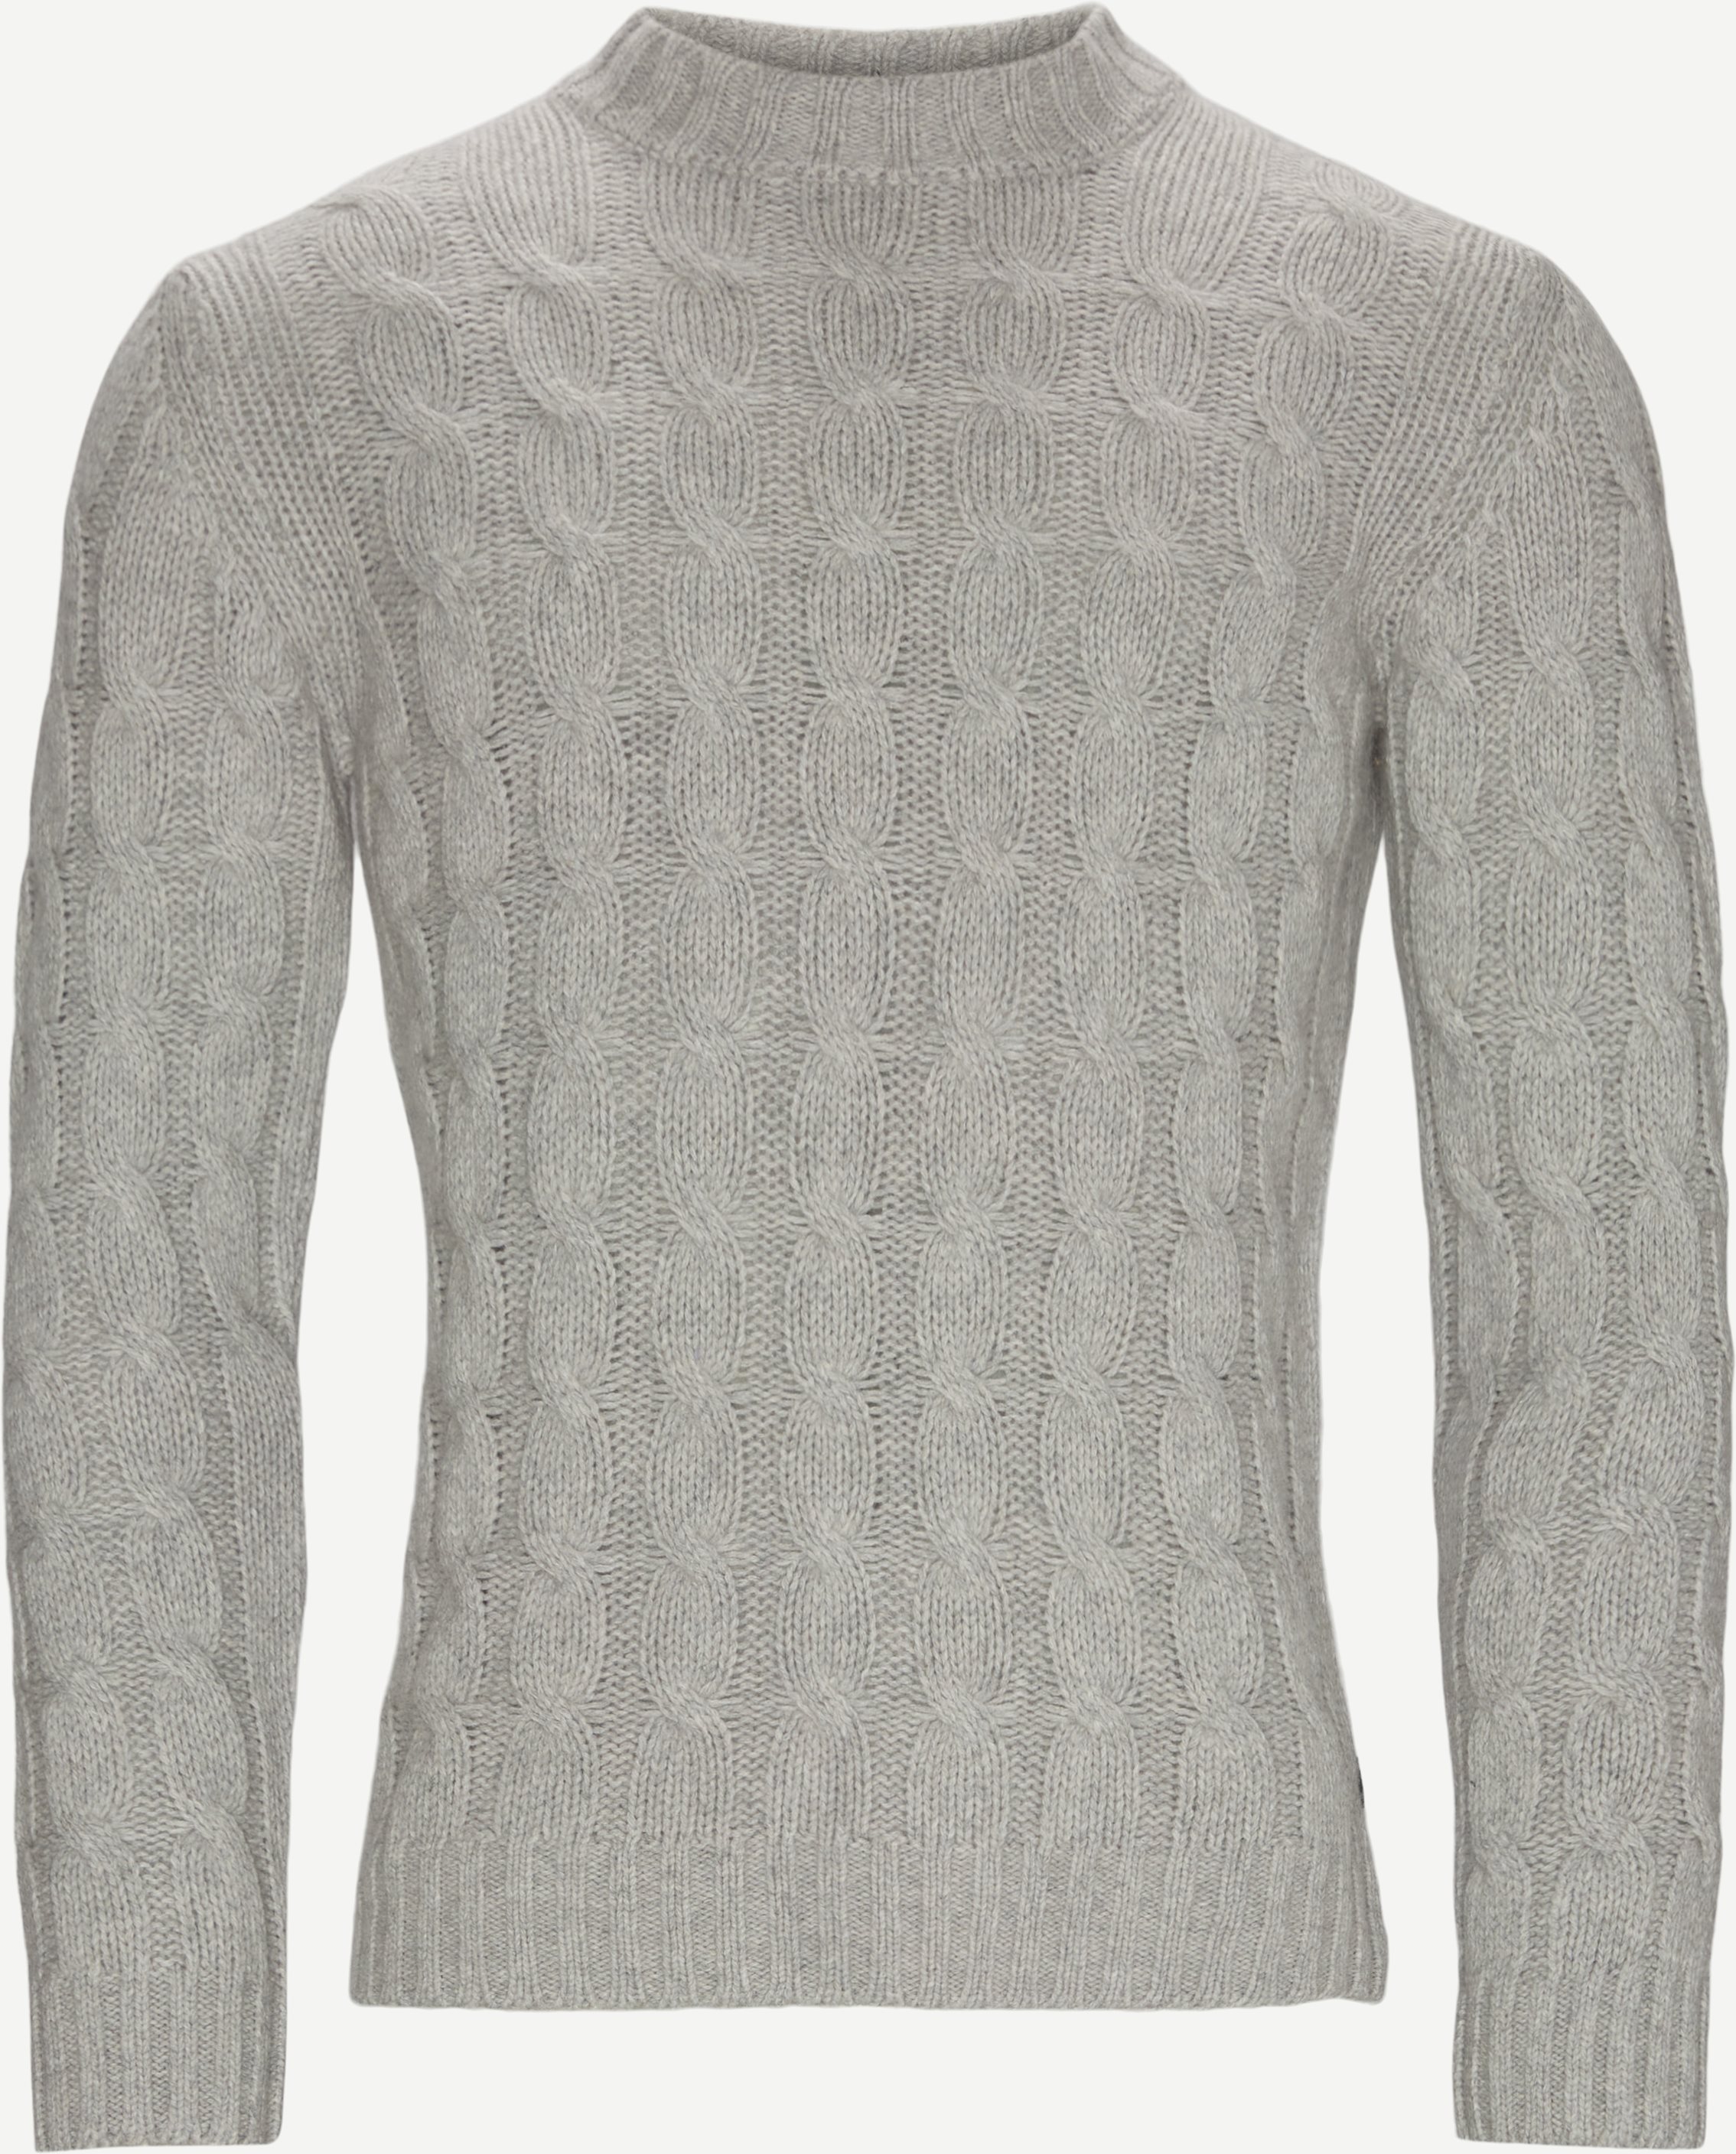 Sand Knitwear 5501 IQ TURTLE Grey